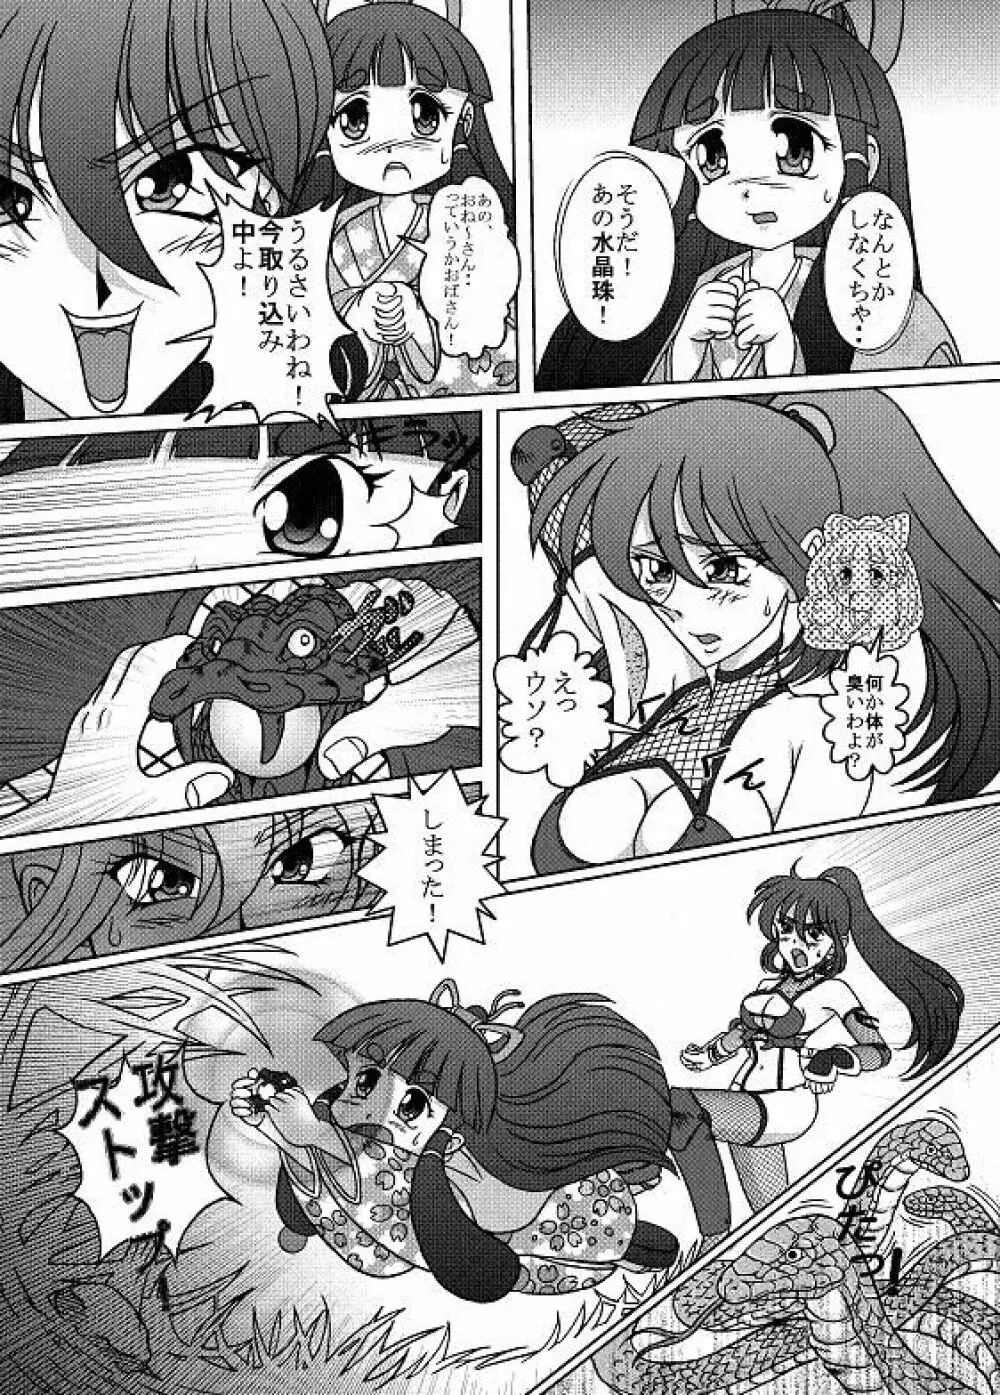 Same-themed manga about kid fighting female ninjas from japanese imageboard. 41ページ